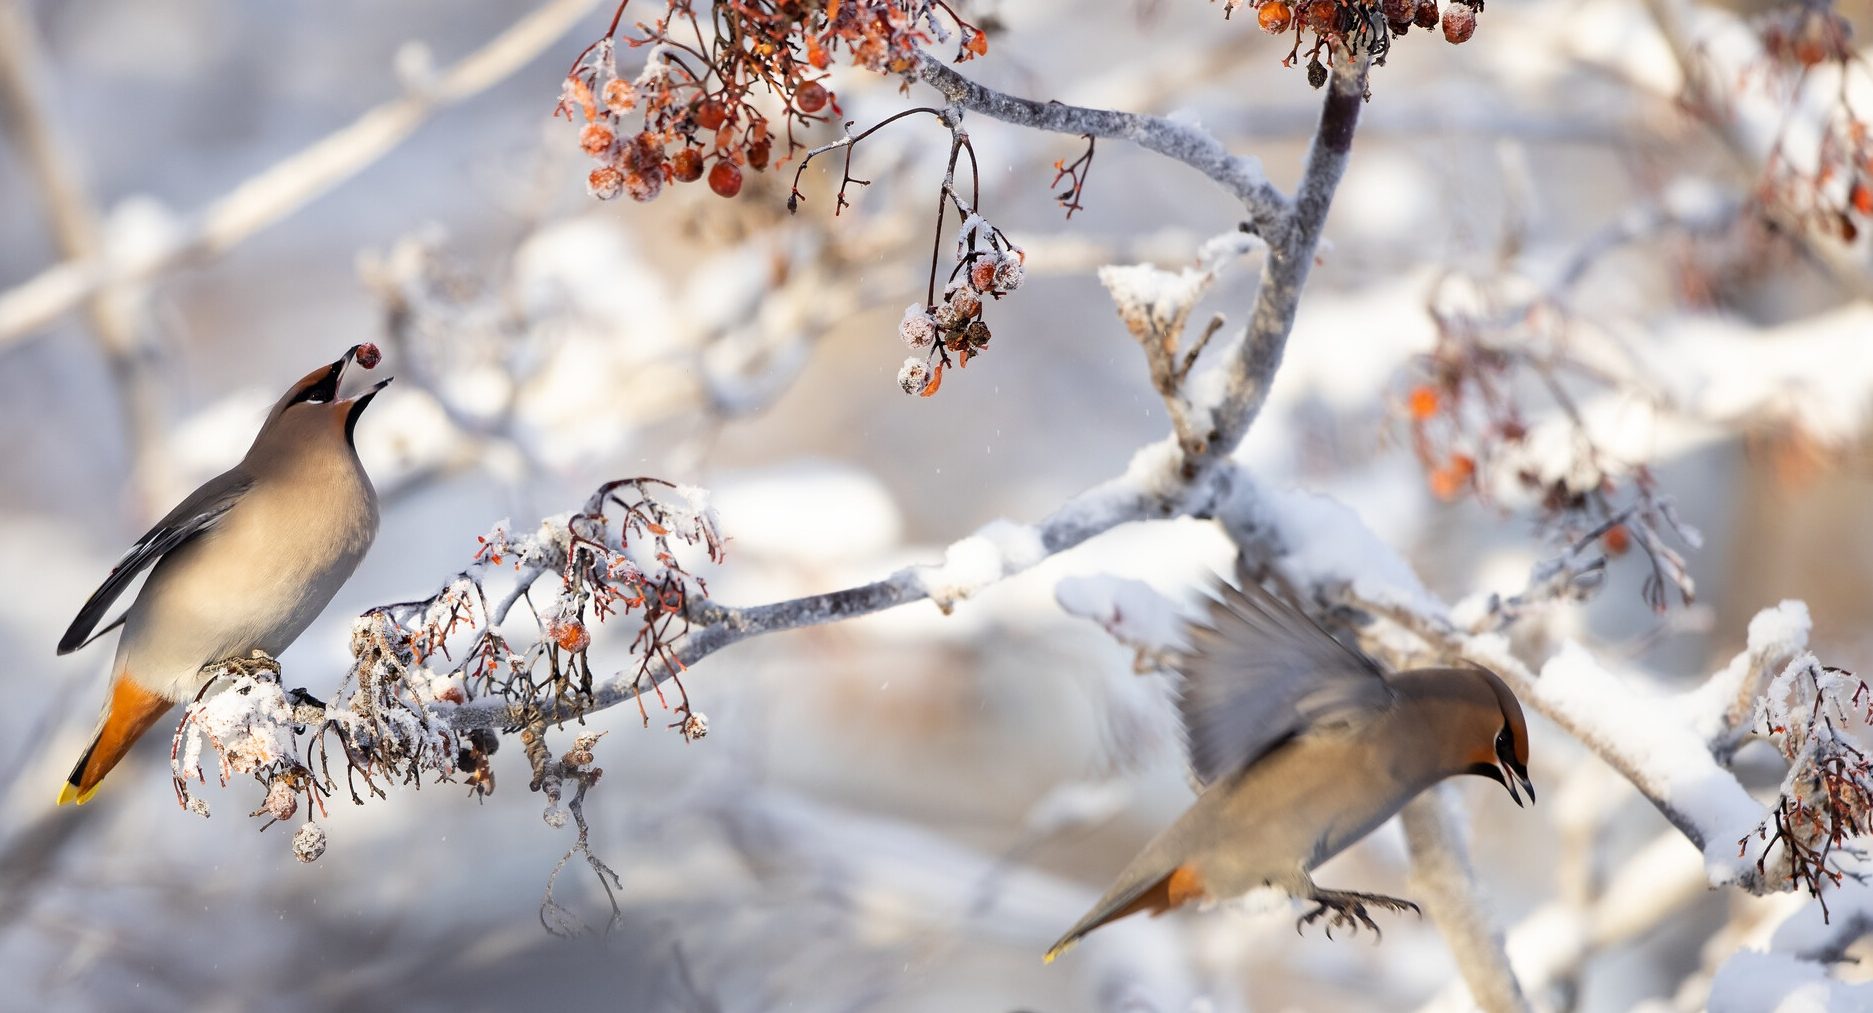 Bohemian waxwings feeding on mountain ash berries in a snowy tree. Credit: Lisa Hupp/USFWS